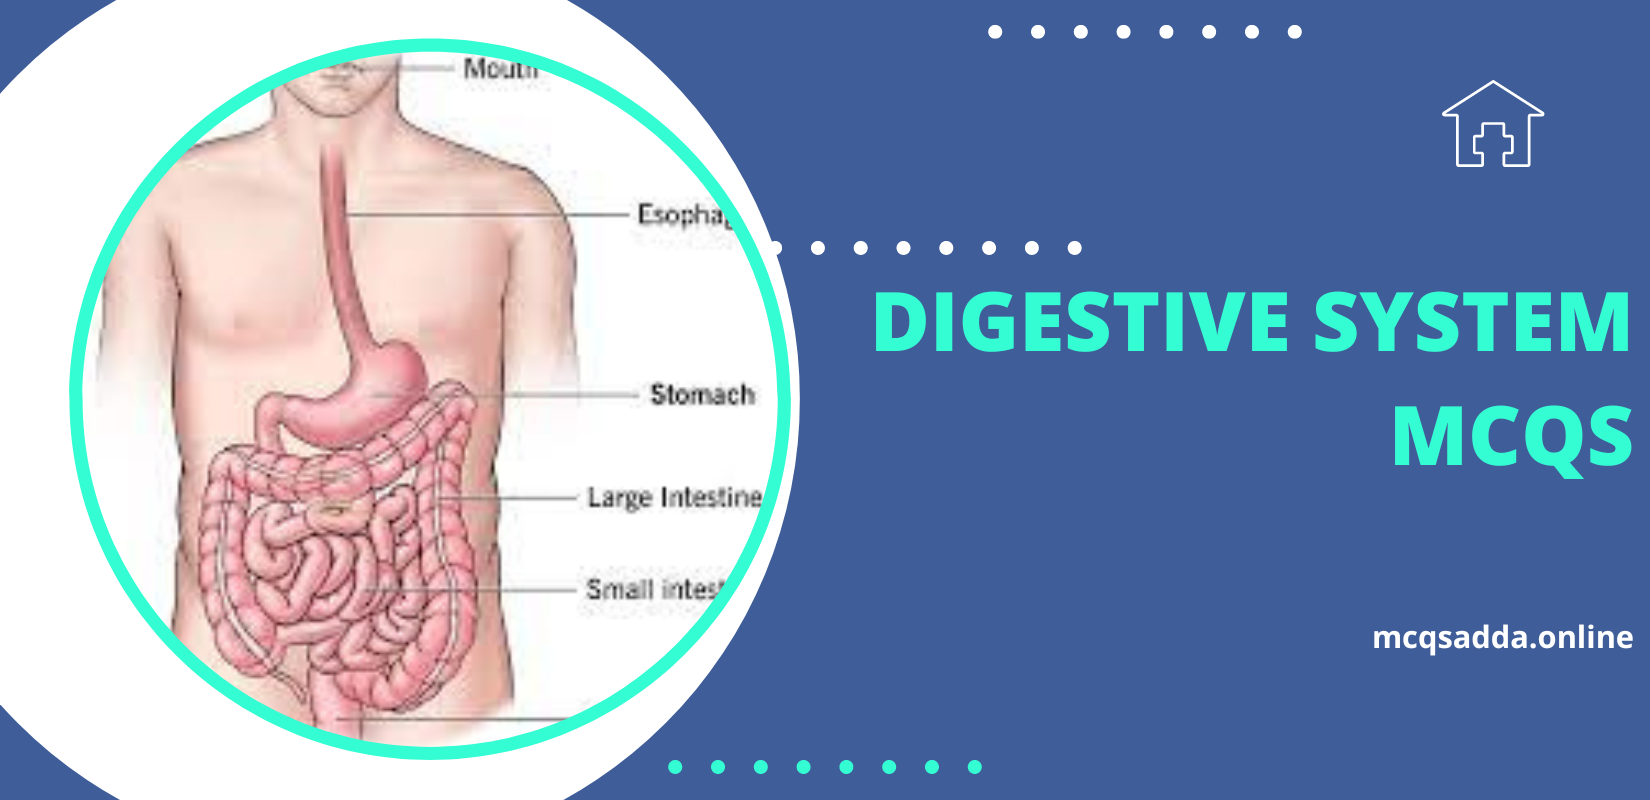 Digestive system MCQs